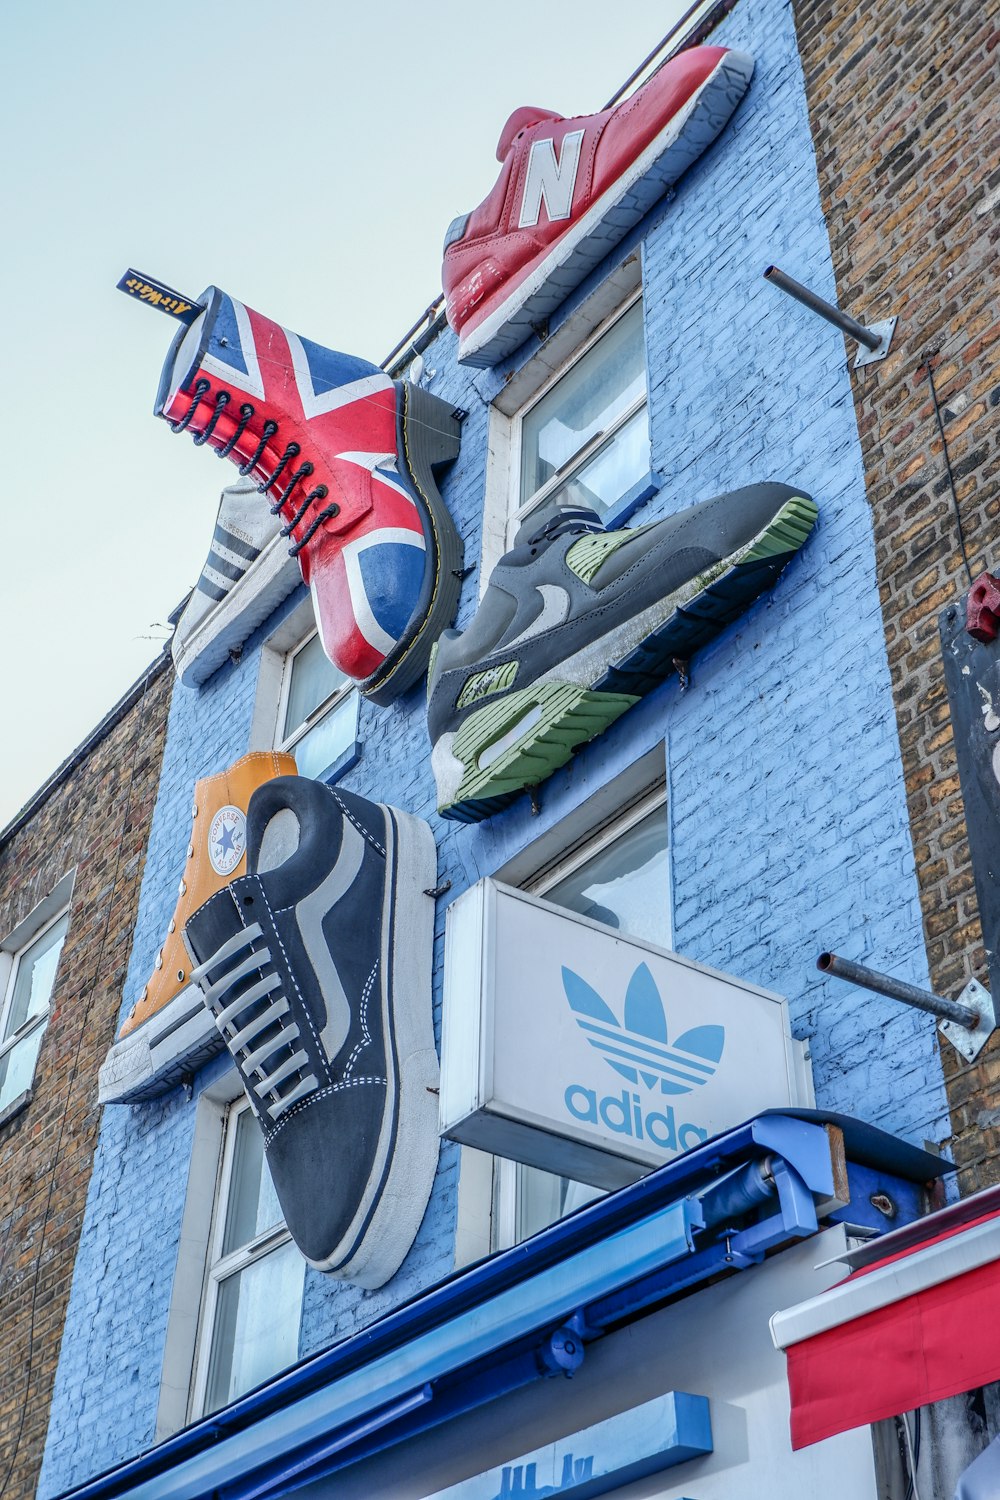 Sneakers shop during daytime photo – Free London Image on Unsplash